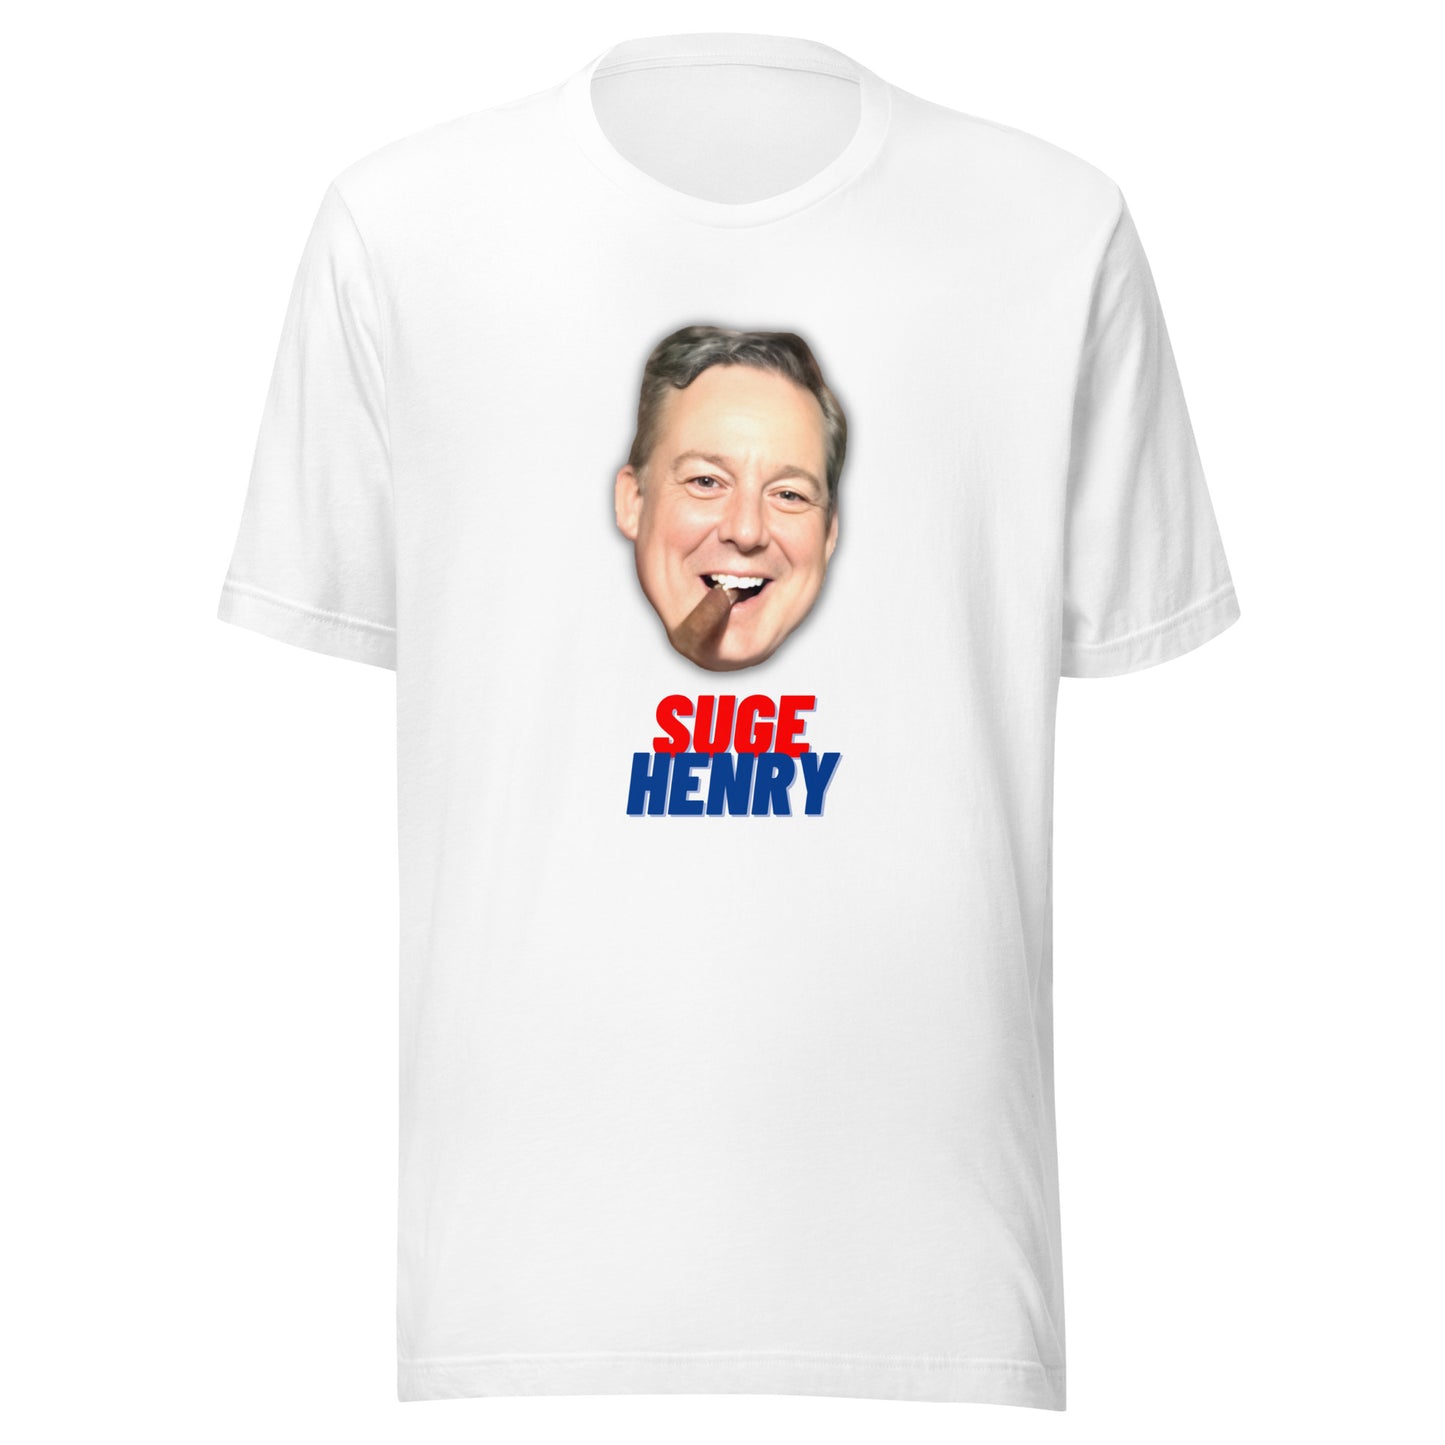 Suge Henry t-shirt